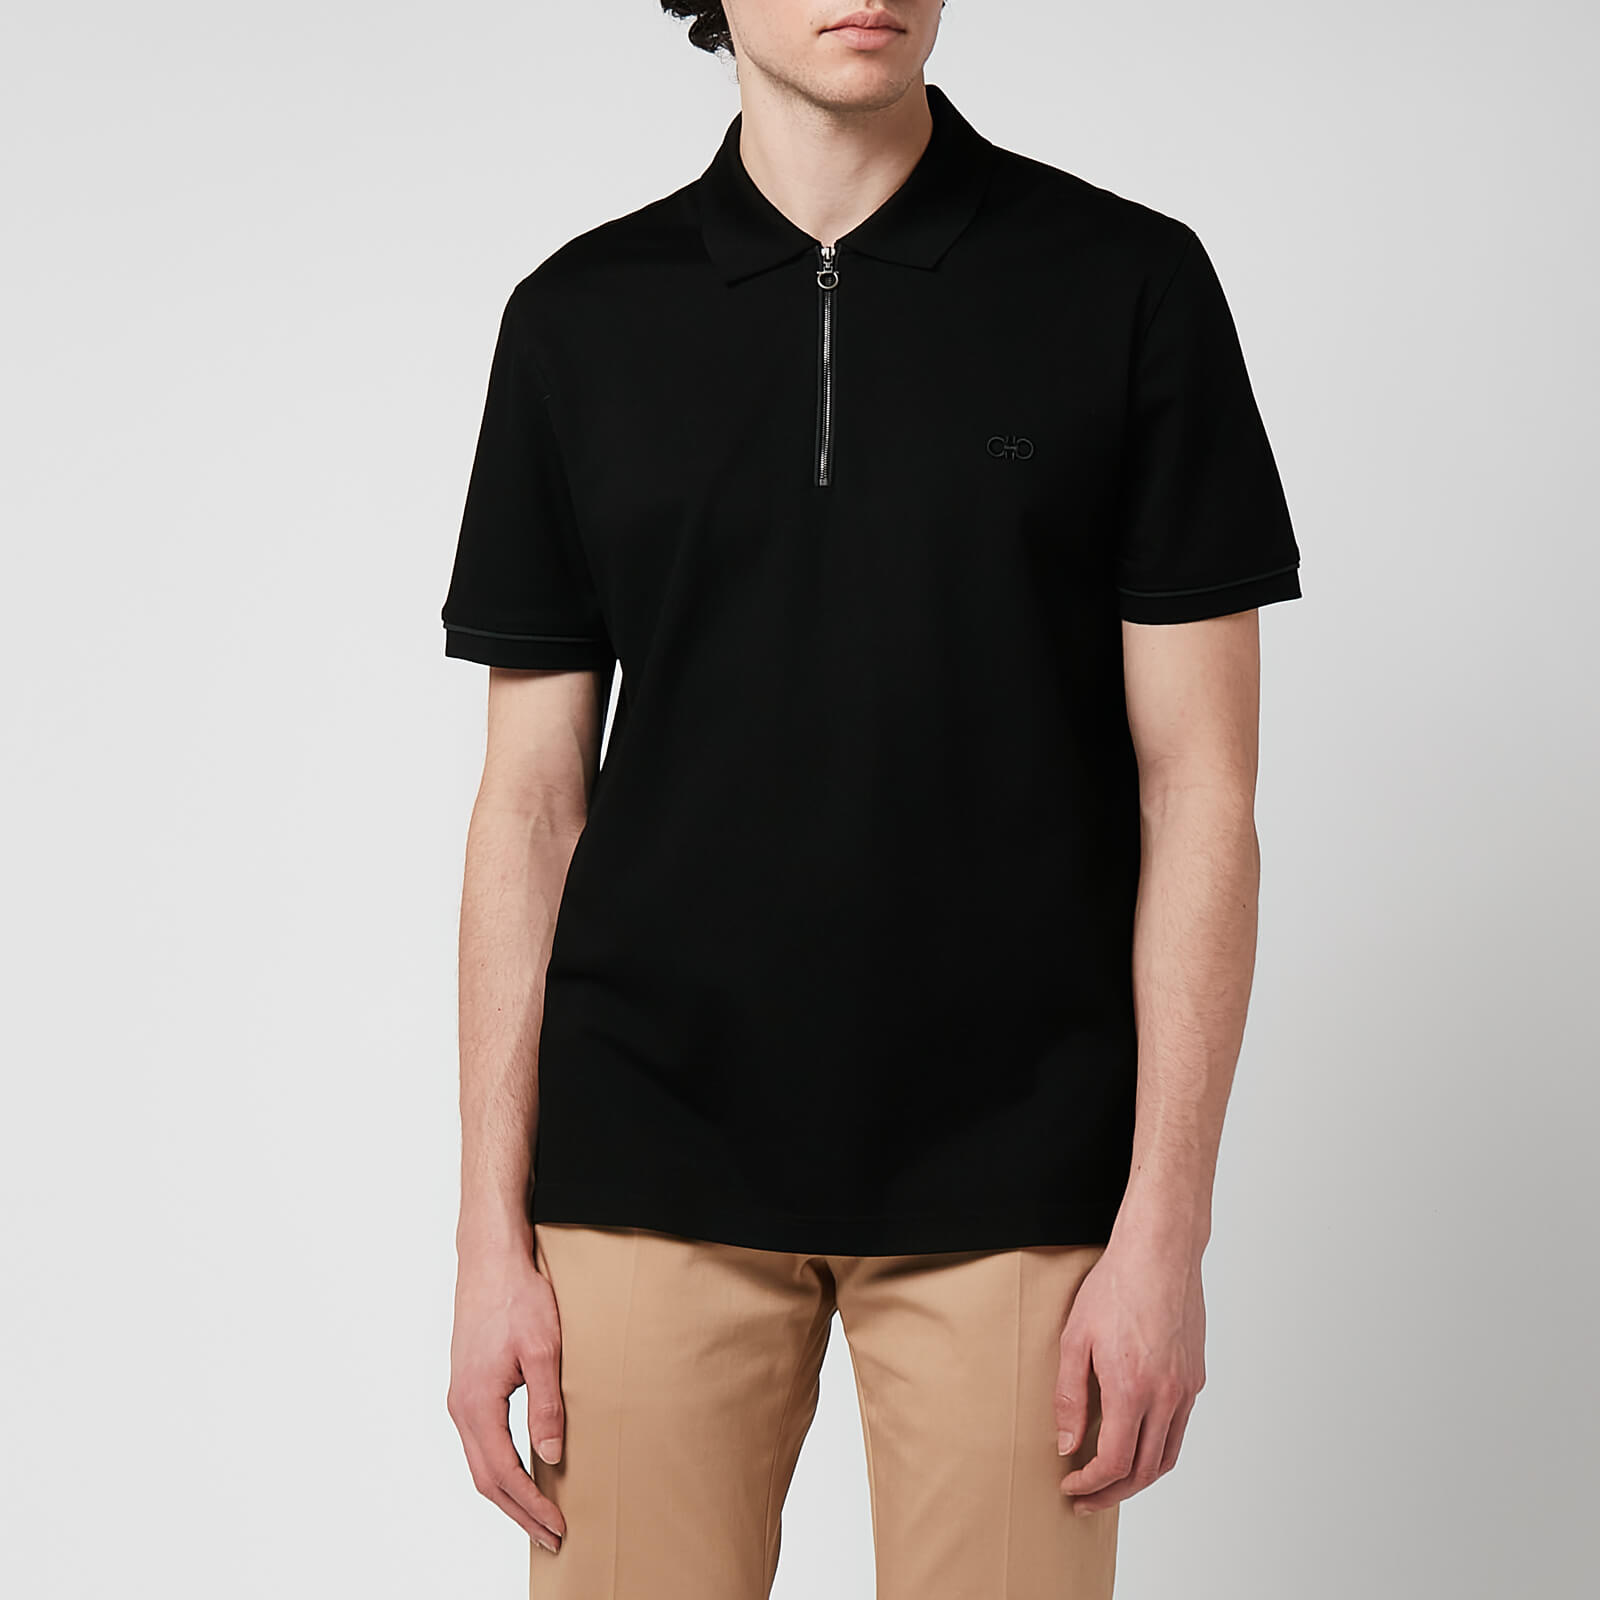 Salvatore Ferragamo Men's Half Zip Polo Shirt - Black - S